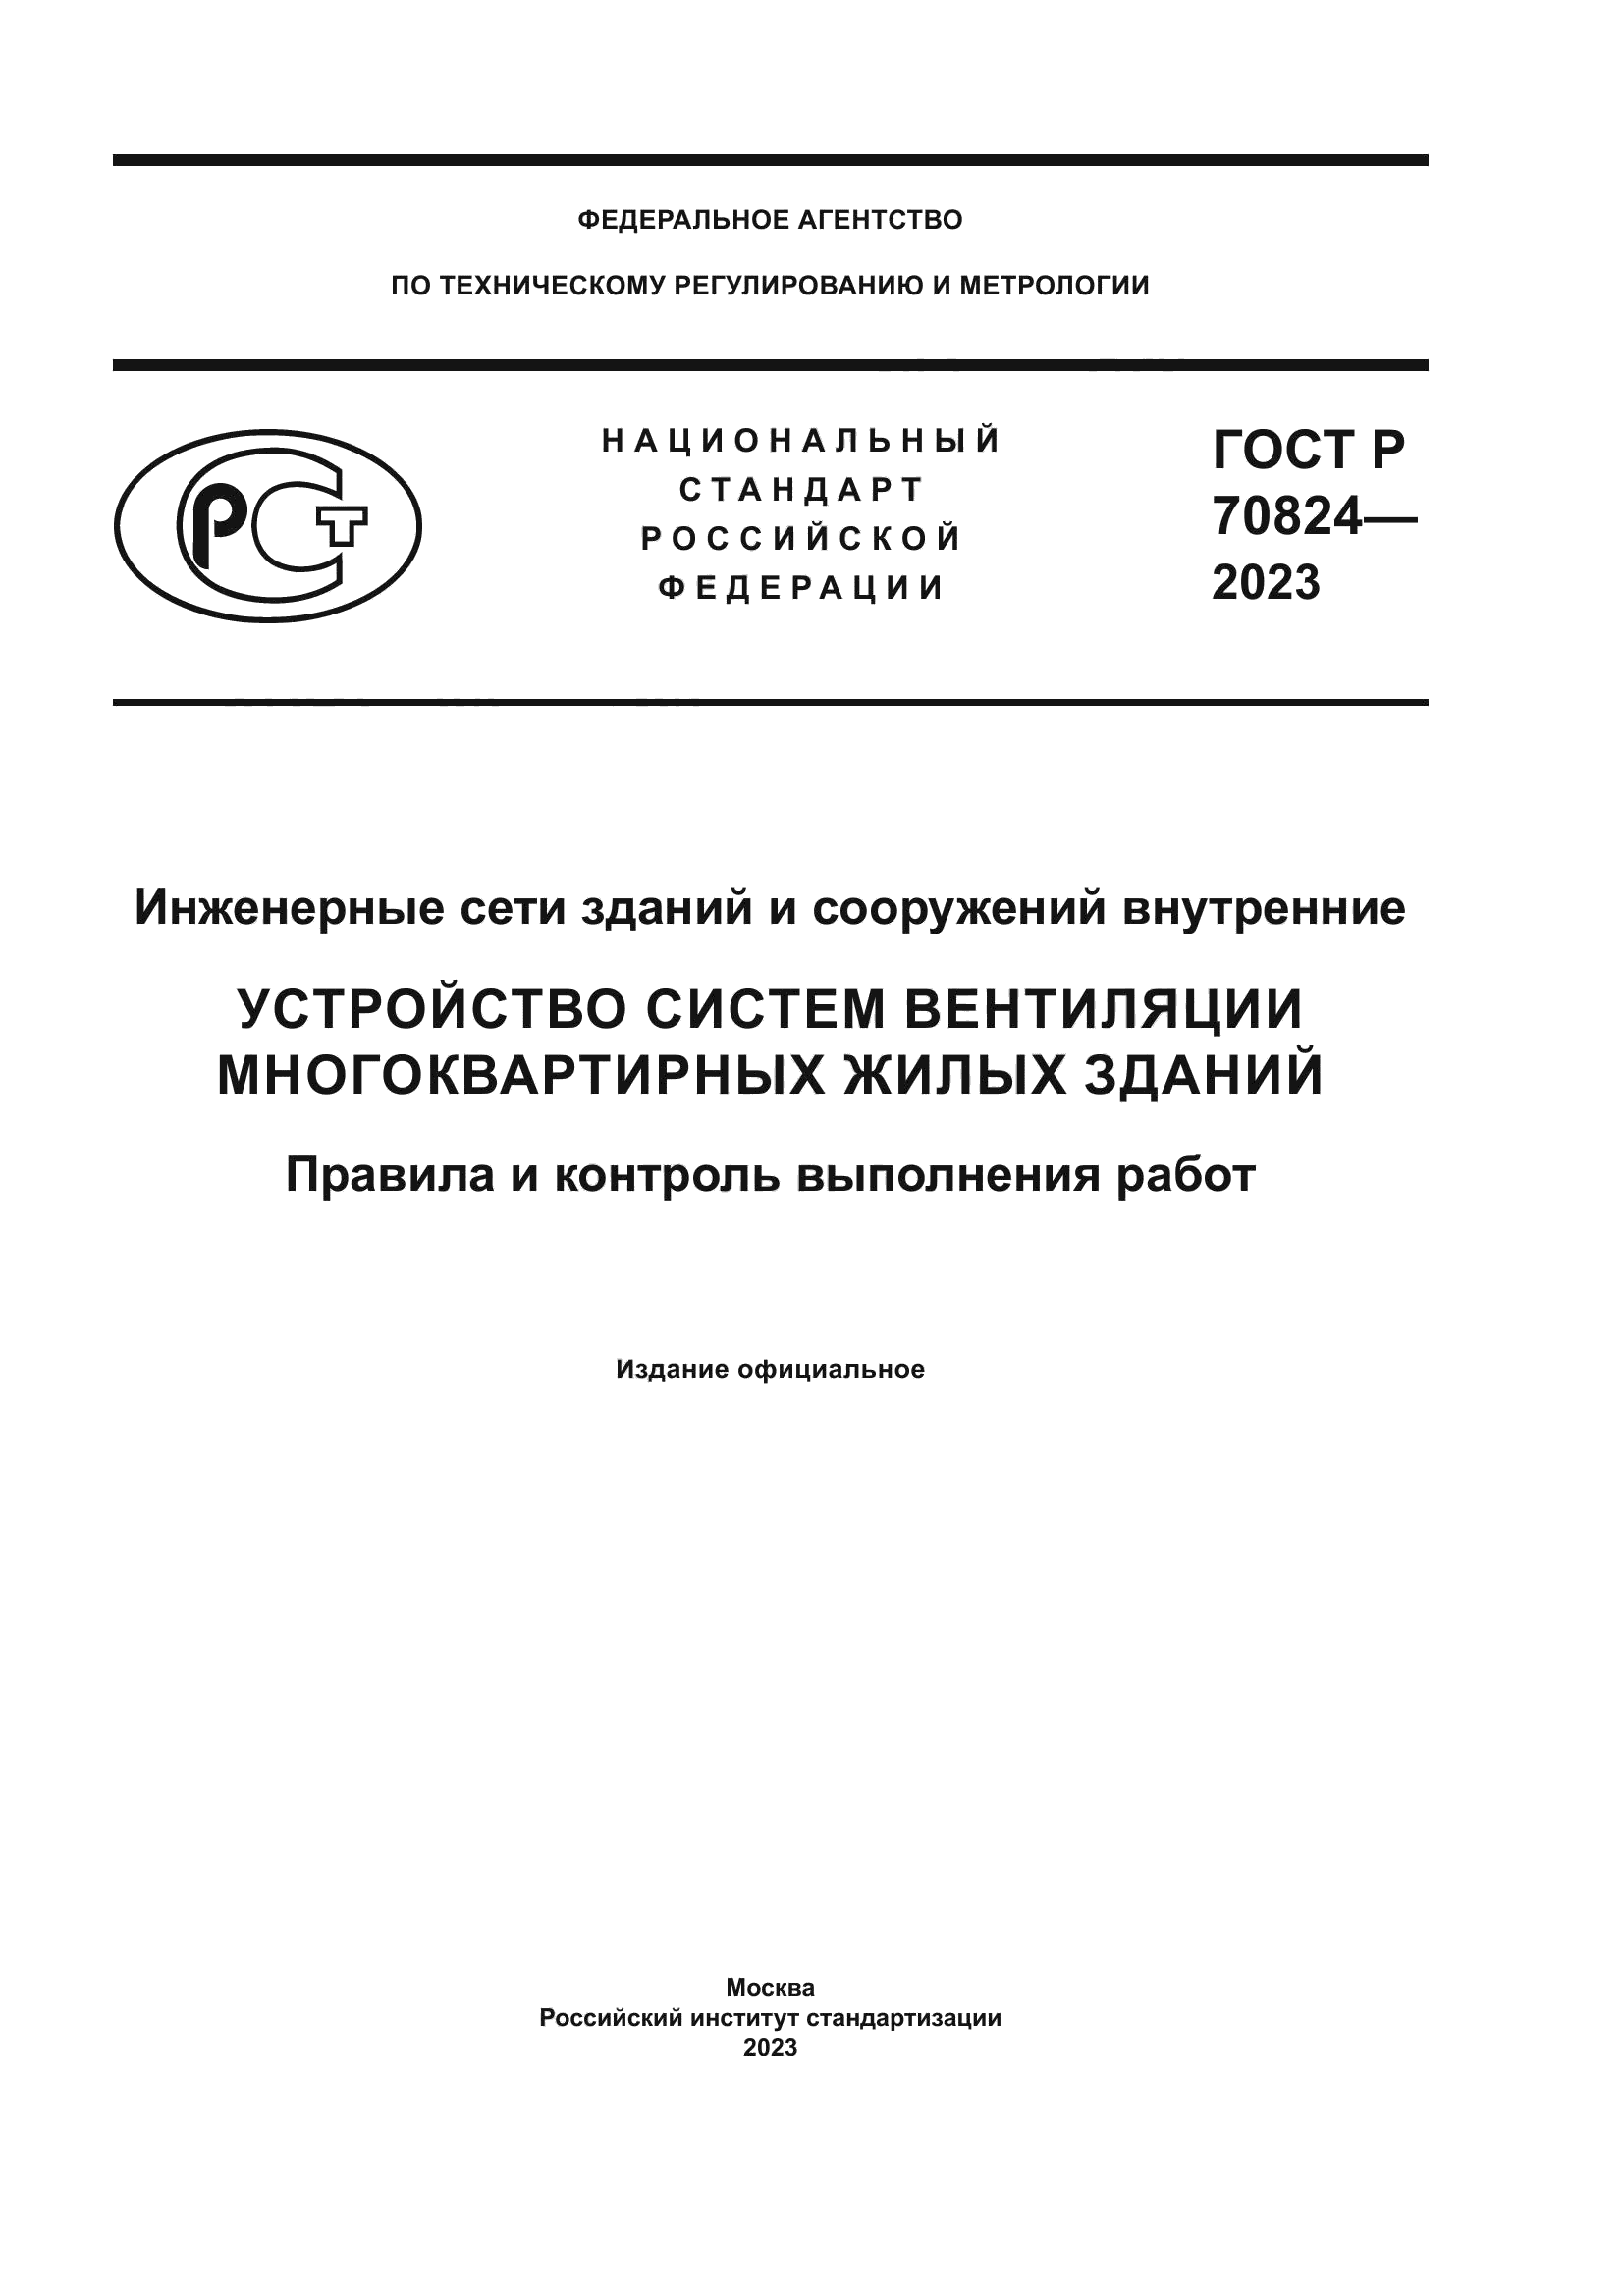 ГОСТ Р 70824-2023